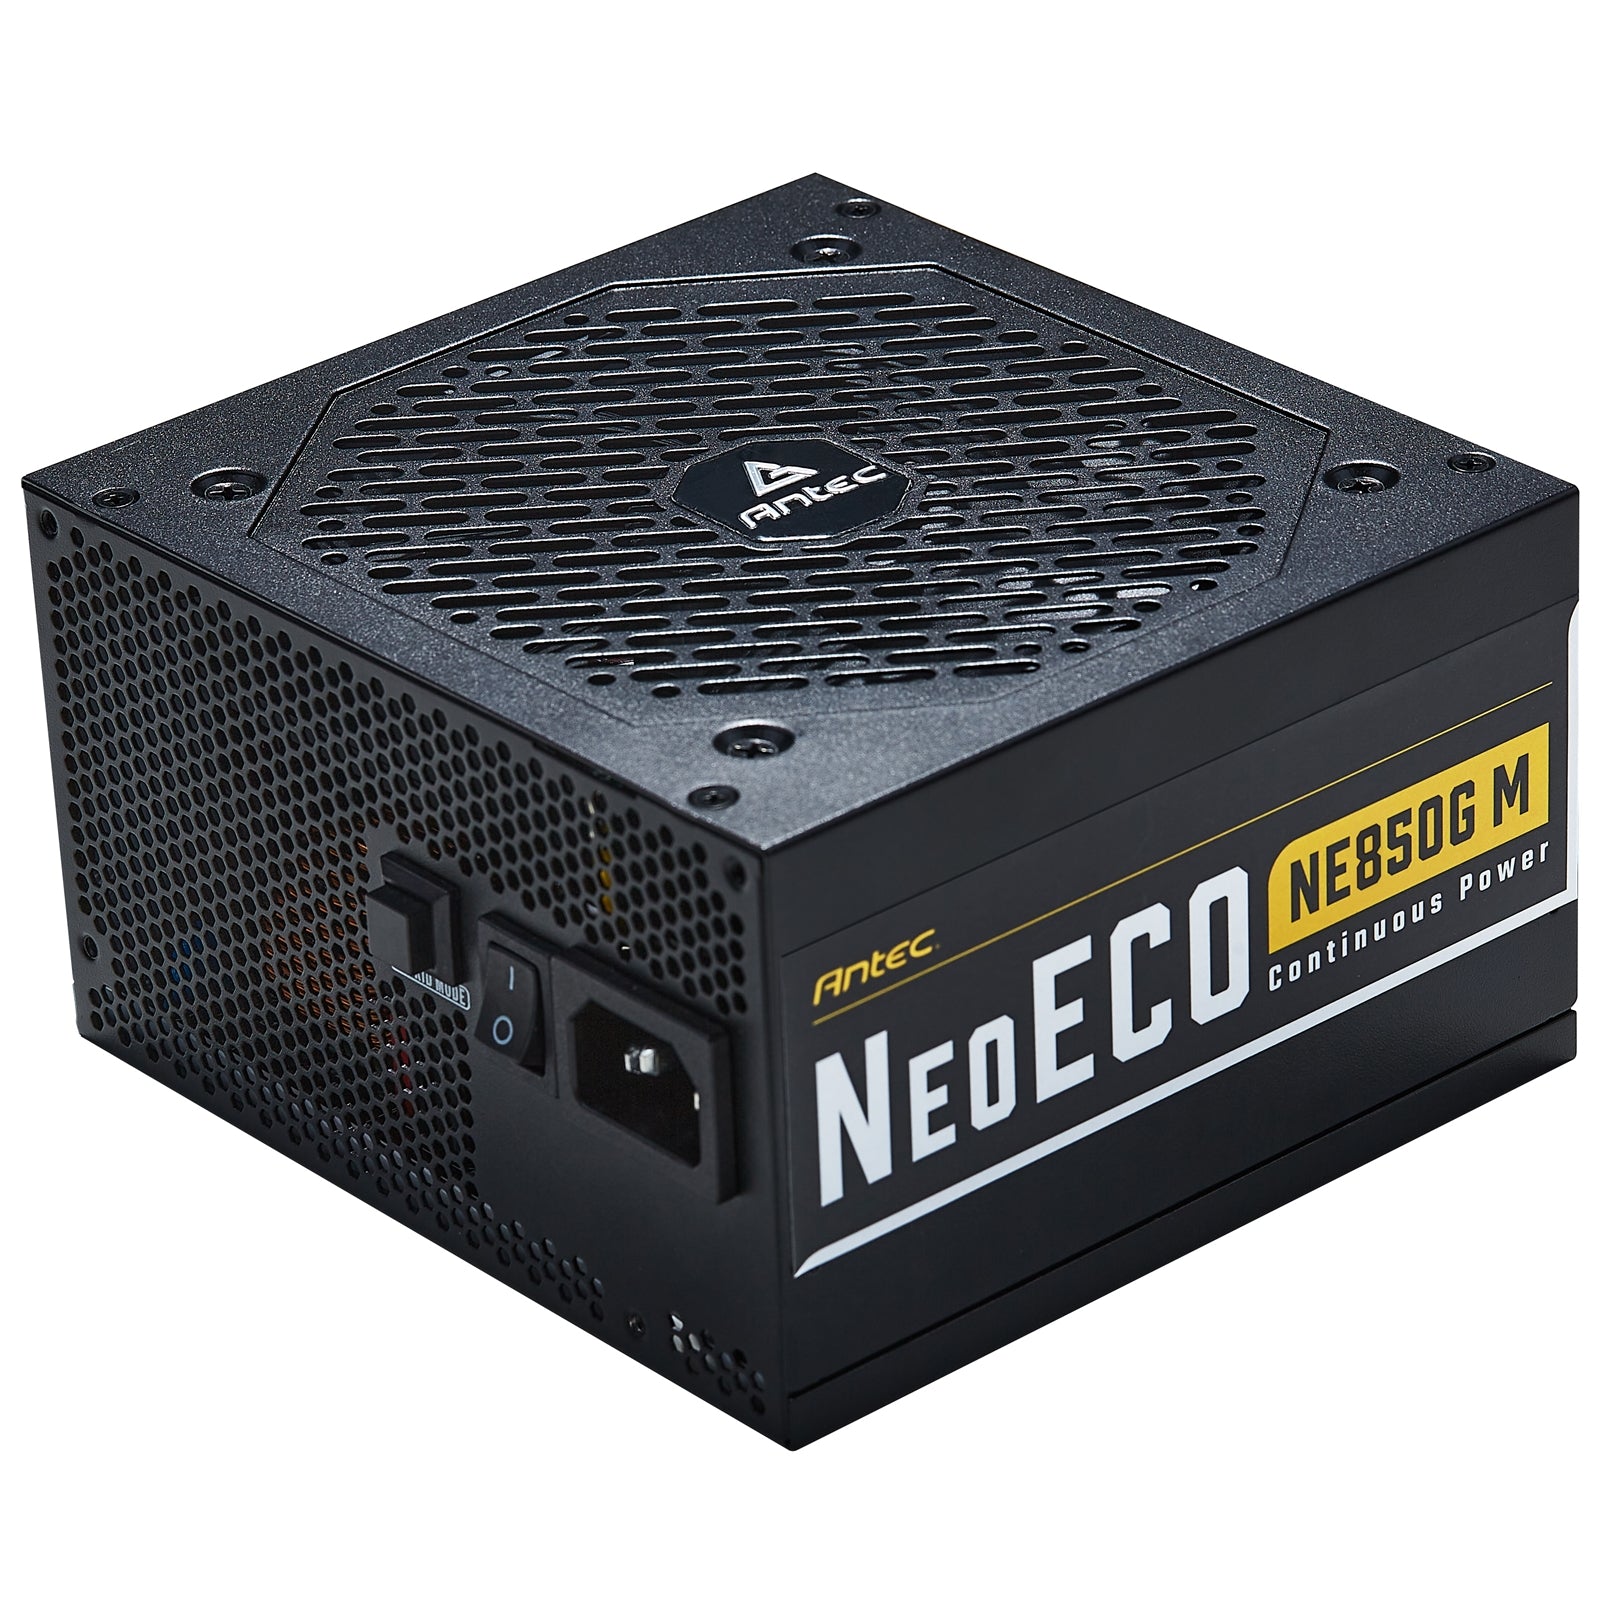 Antec NeoECO Gold 850W PSU Fully Modular, 80 PLUS Gold Certified, Silent 120mm Fan